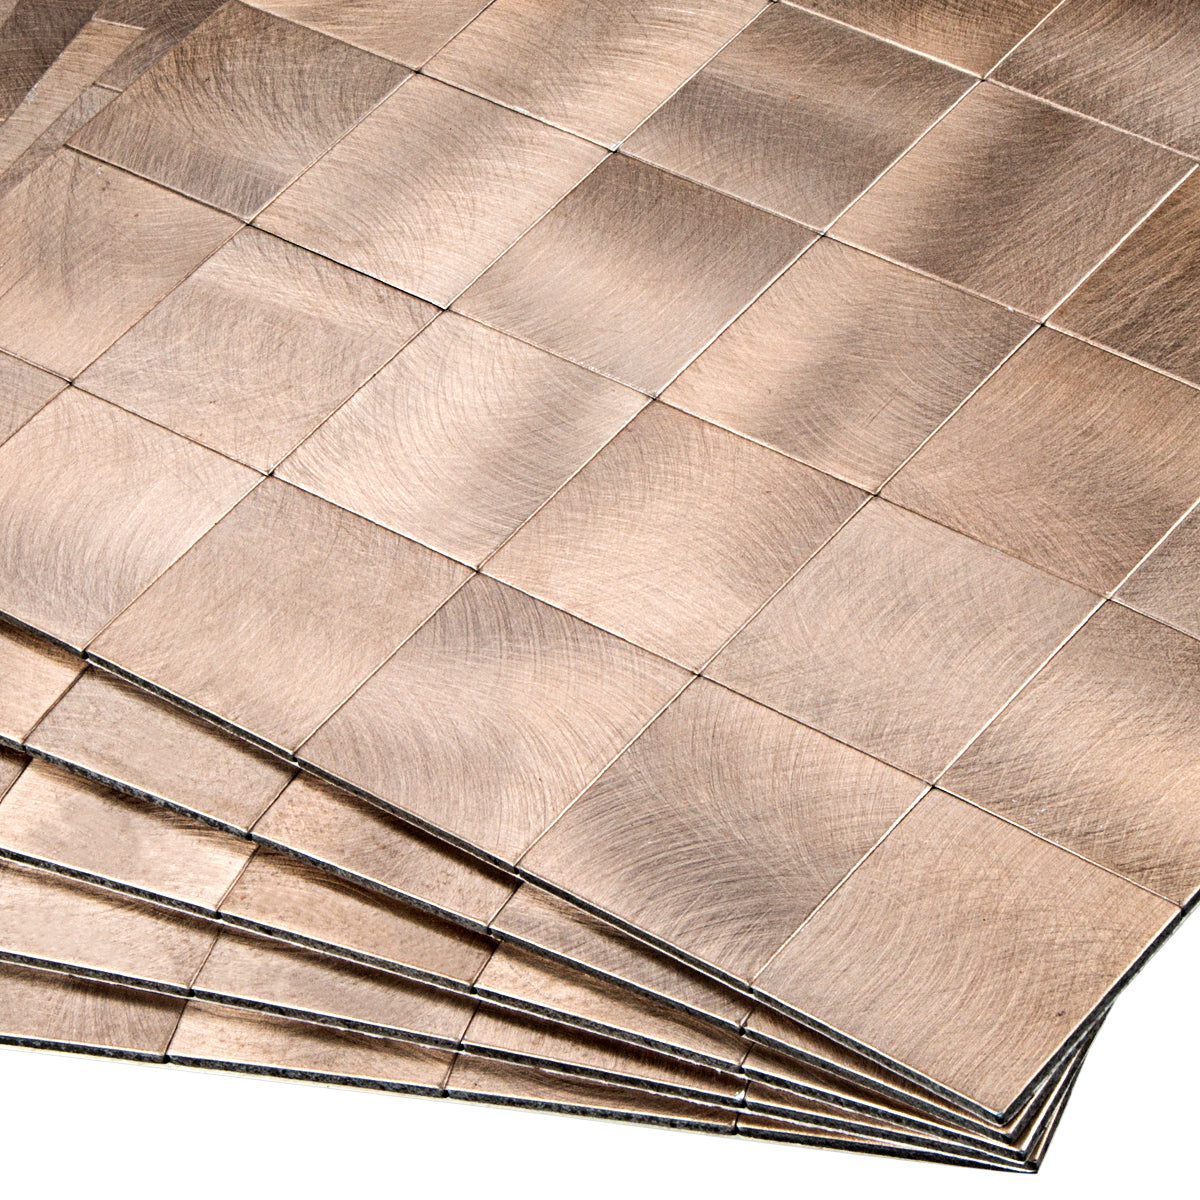 Decopus Copper Metal Tile Backsplash Peel and Stick (Square AC50 Copper Matte 5pc/Pack 12 x12'', 1.6''), Self Adhesive Tile